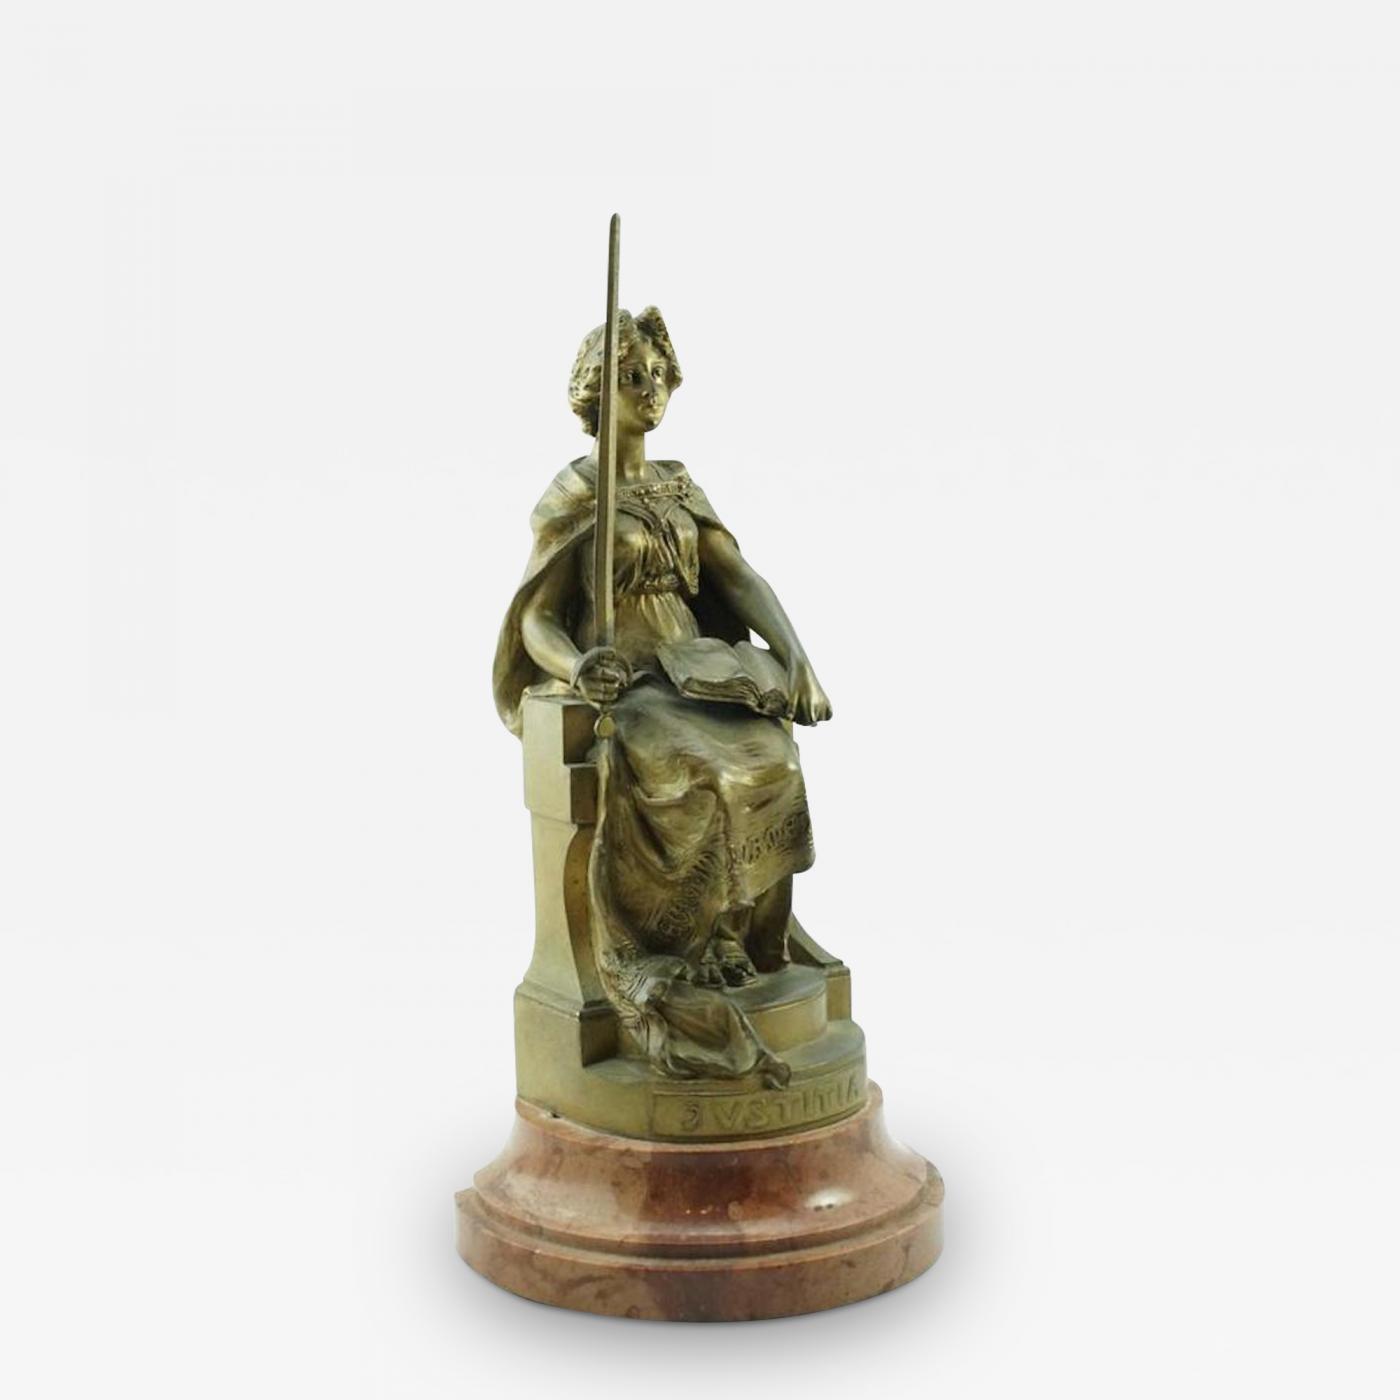 couscous vært Uforudsete omstændigheder Carl Kauba - Carl Kauba Bronze Figure of "Justitia" Seated Woman with Sword